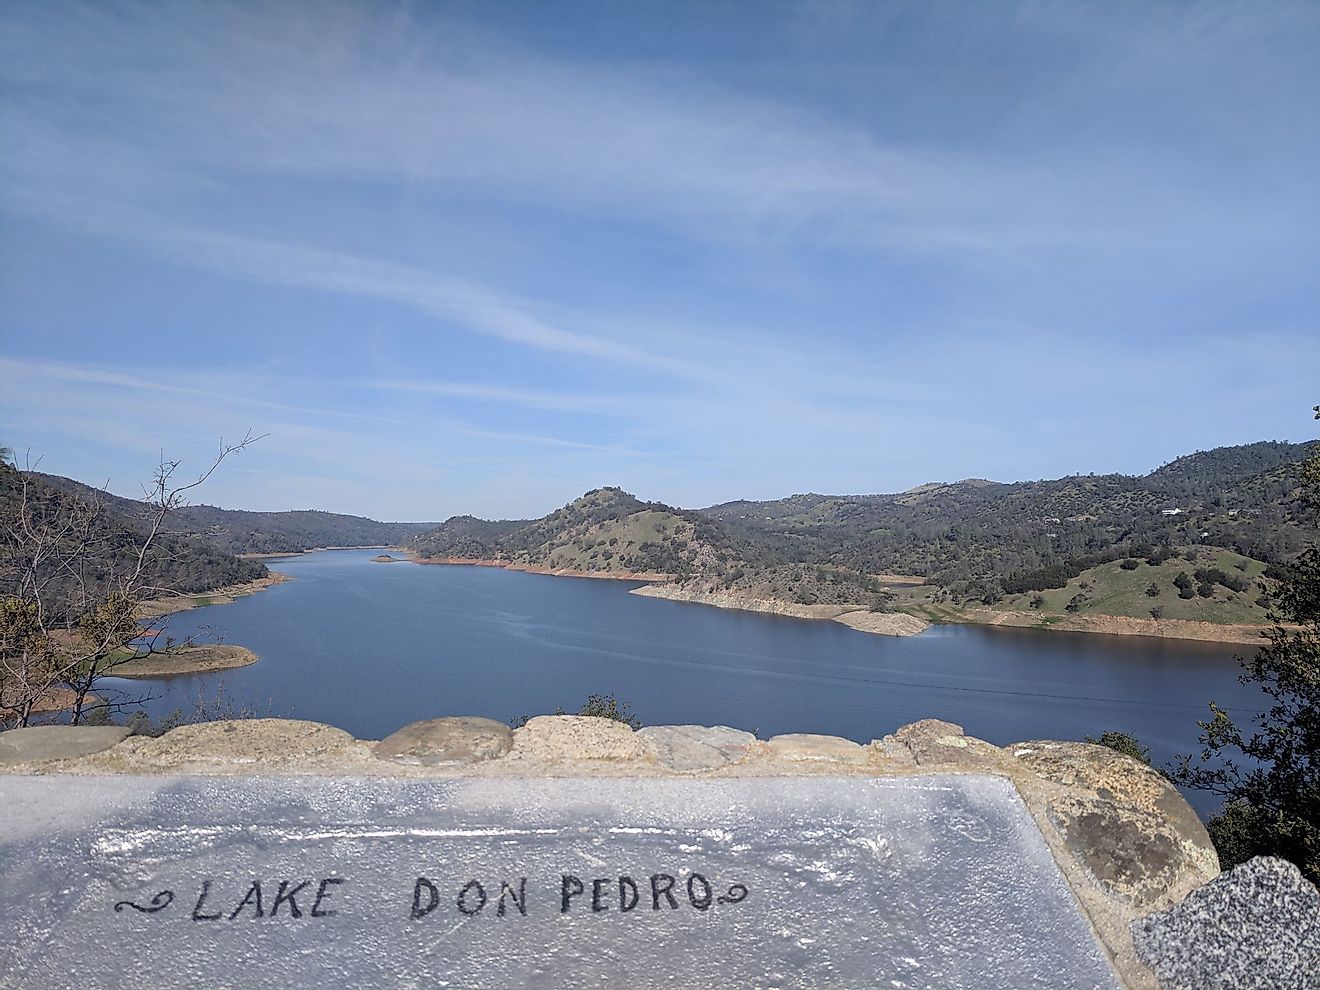 Lake Don Pedro and the surrounding Sierra Nevada Mountains, California. 